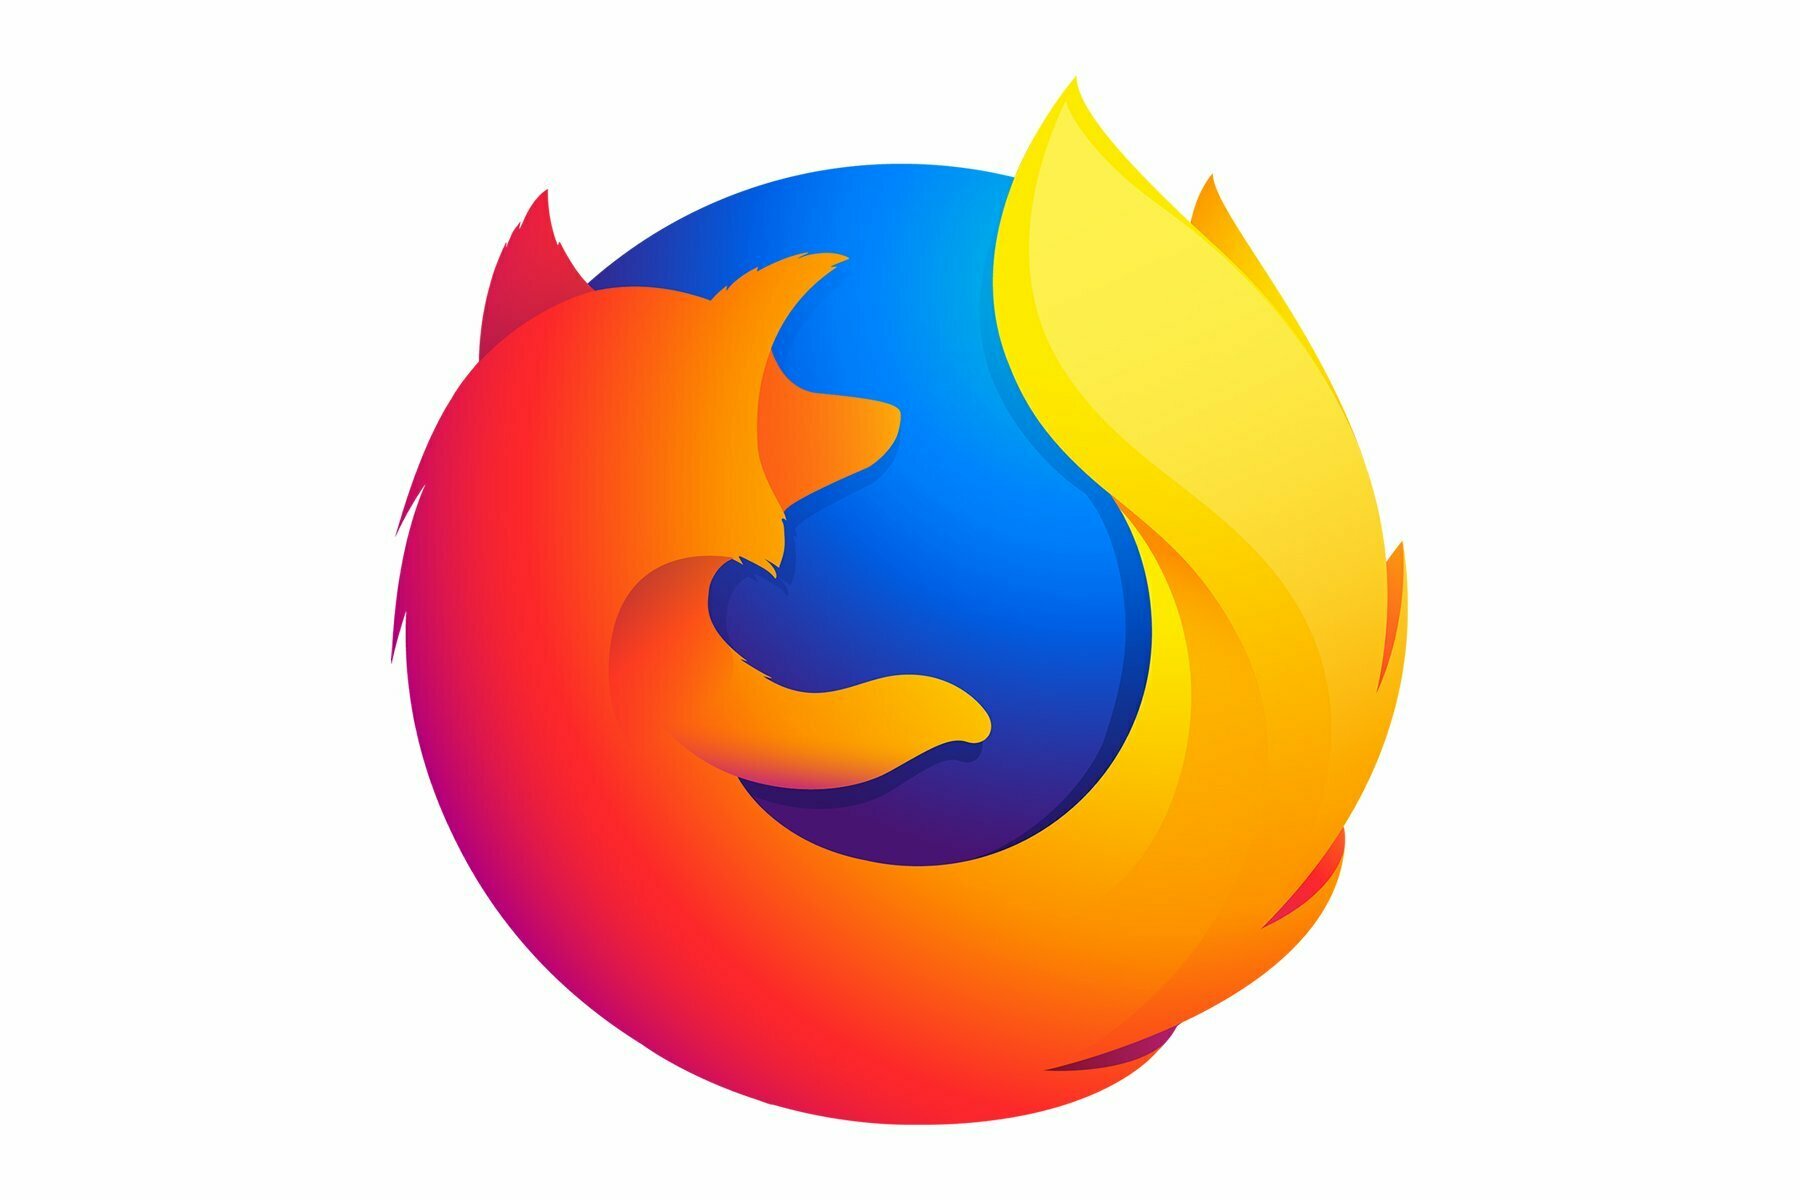 FireFox browser